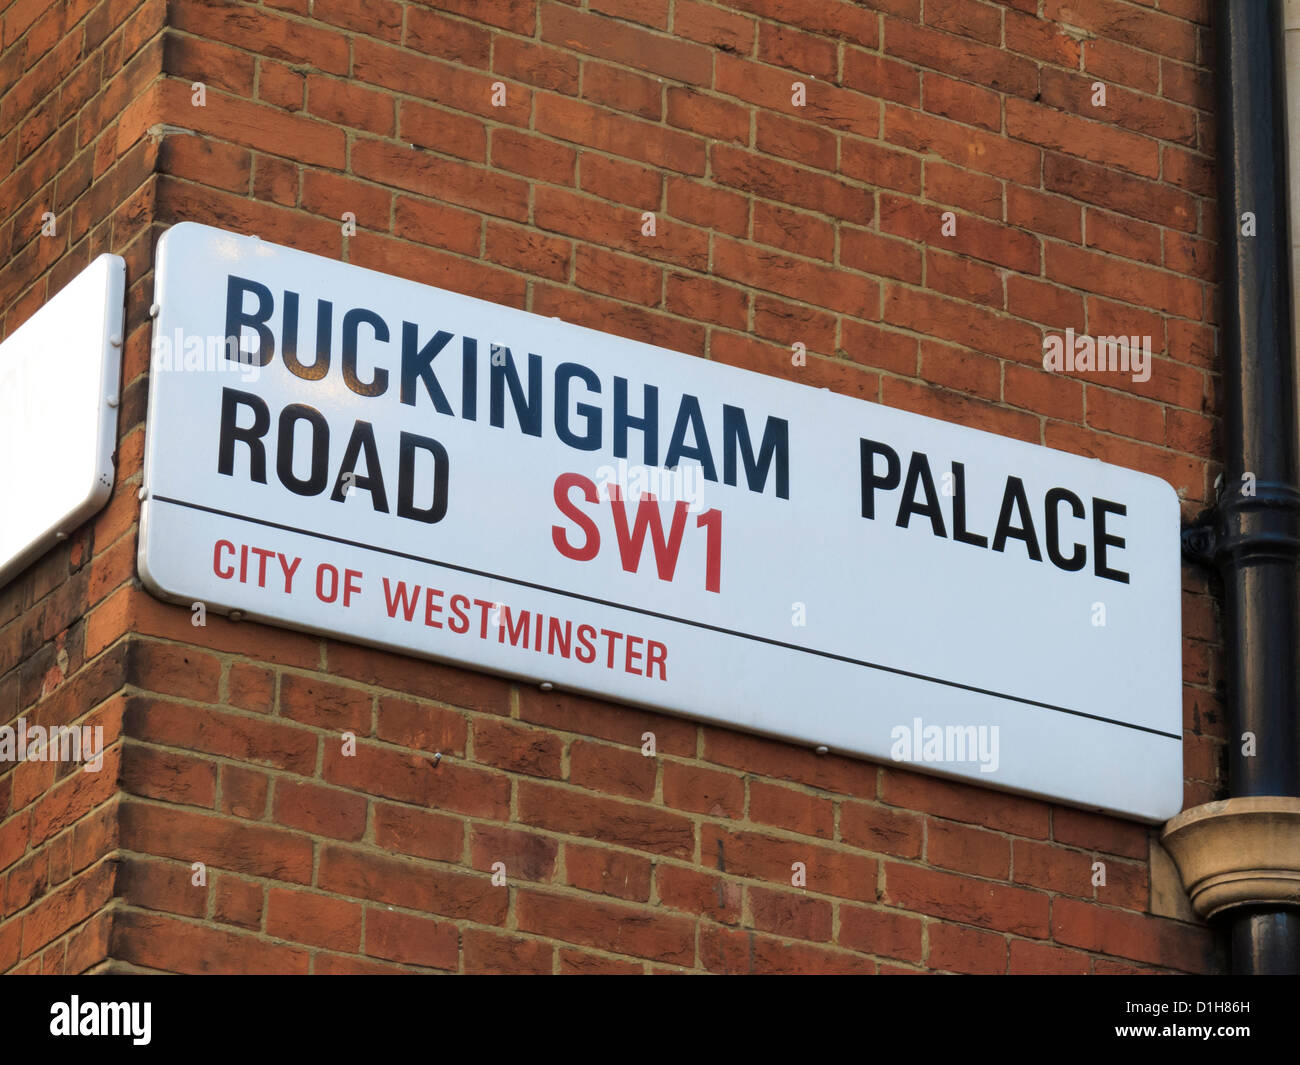 Buckingham Palace Road Ciudad de Westminster Londres SW1 Inglaterra Foto de stock